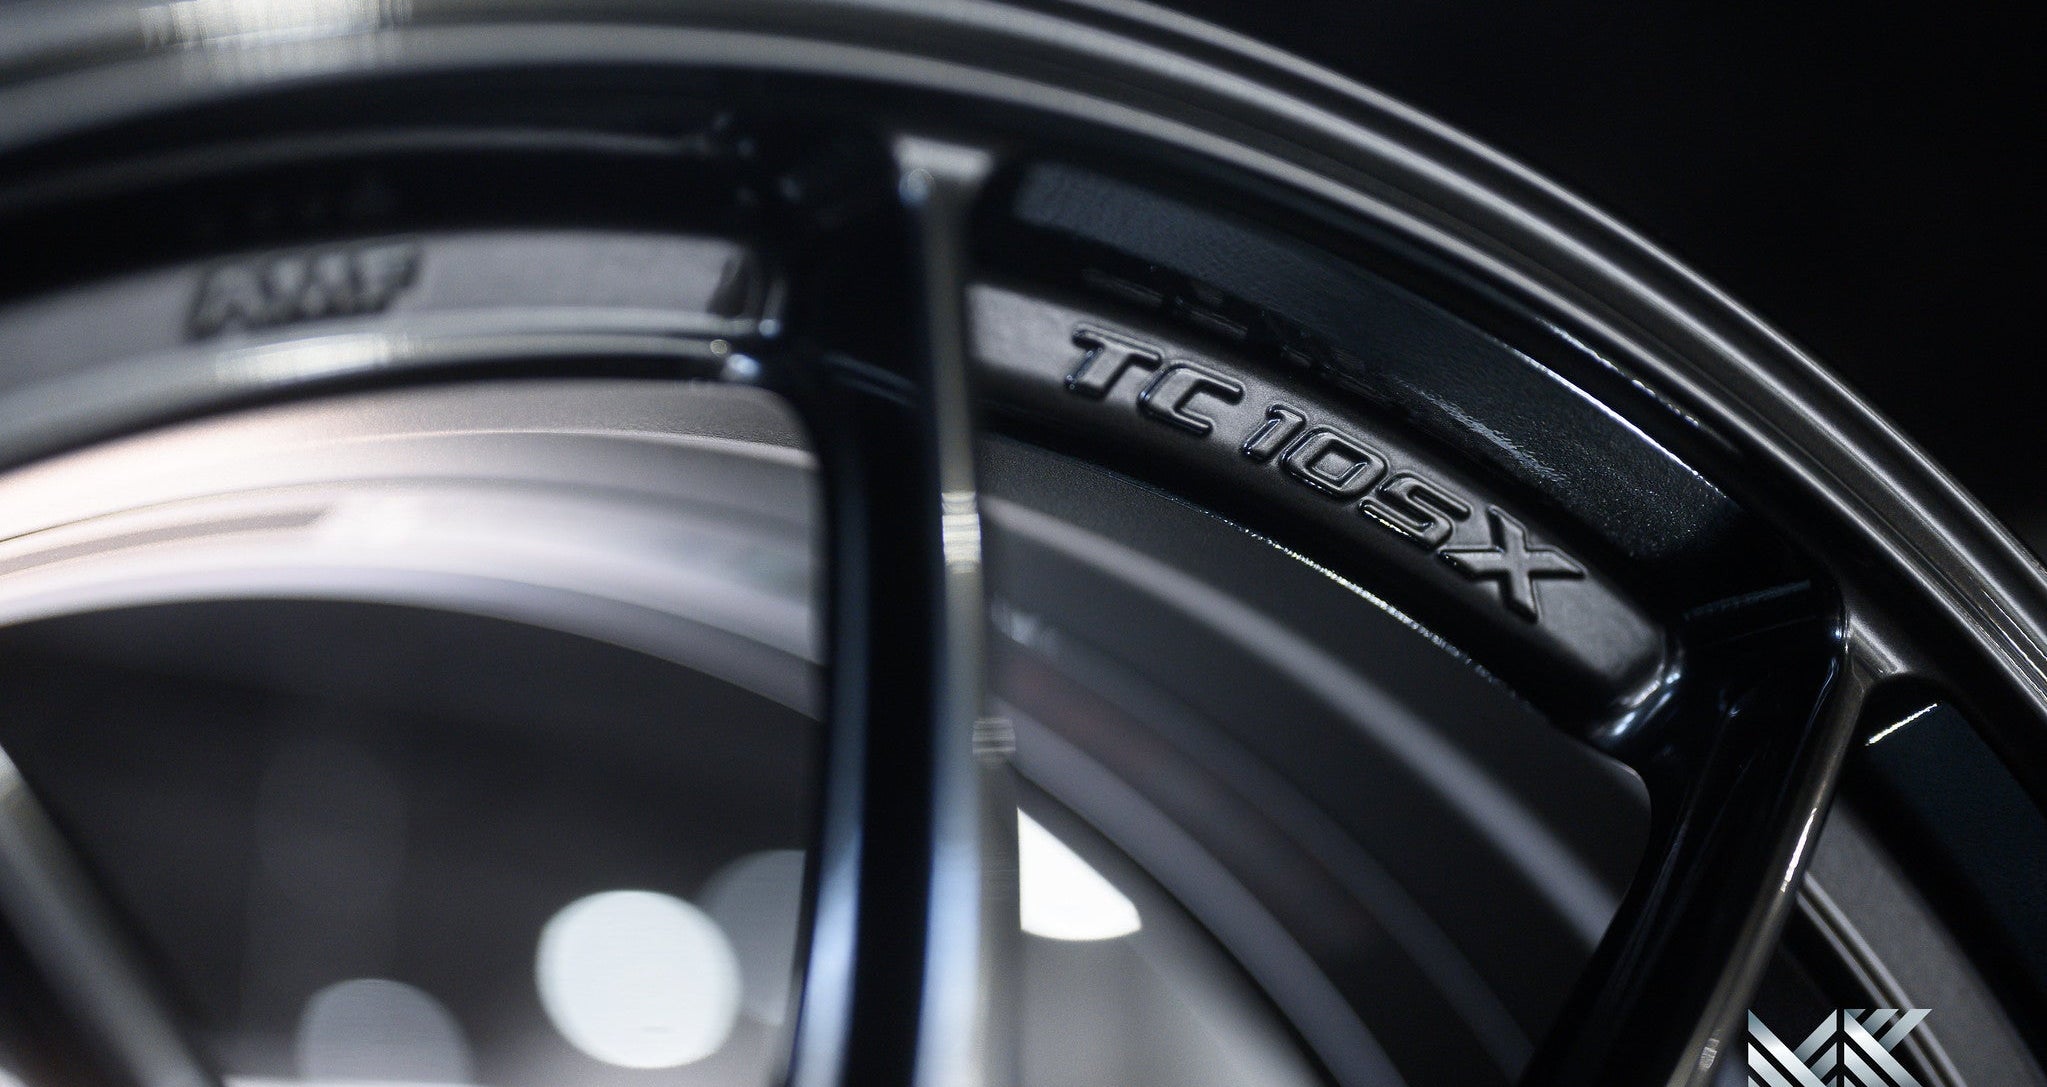 WedsSport TC105X - Premium Wheels from WedsSport - From just $2699! Shop now at MK MOTORSPORTS